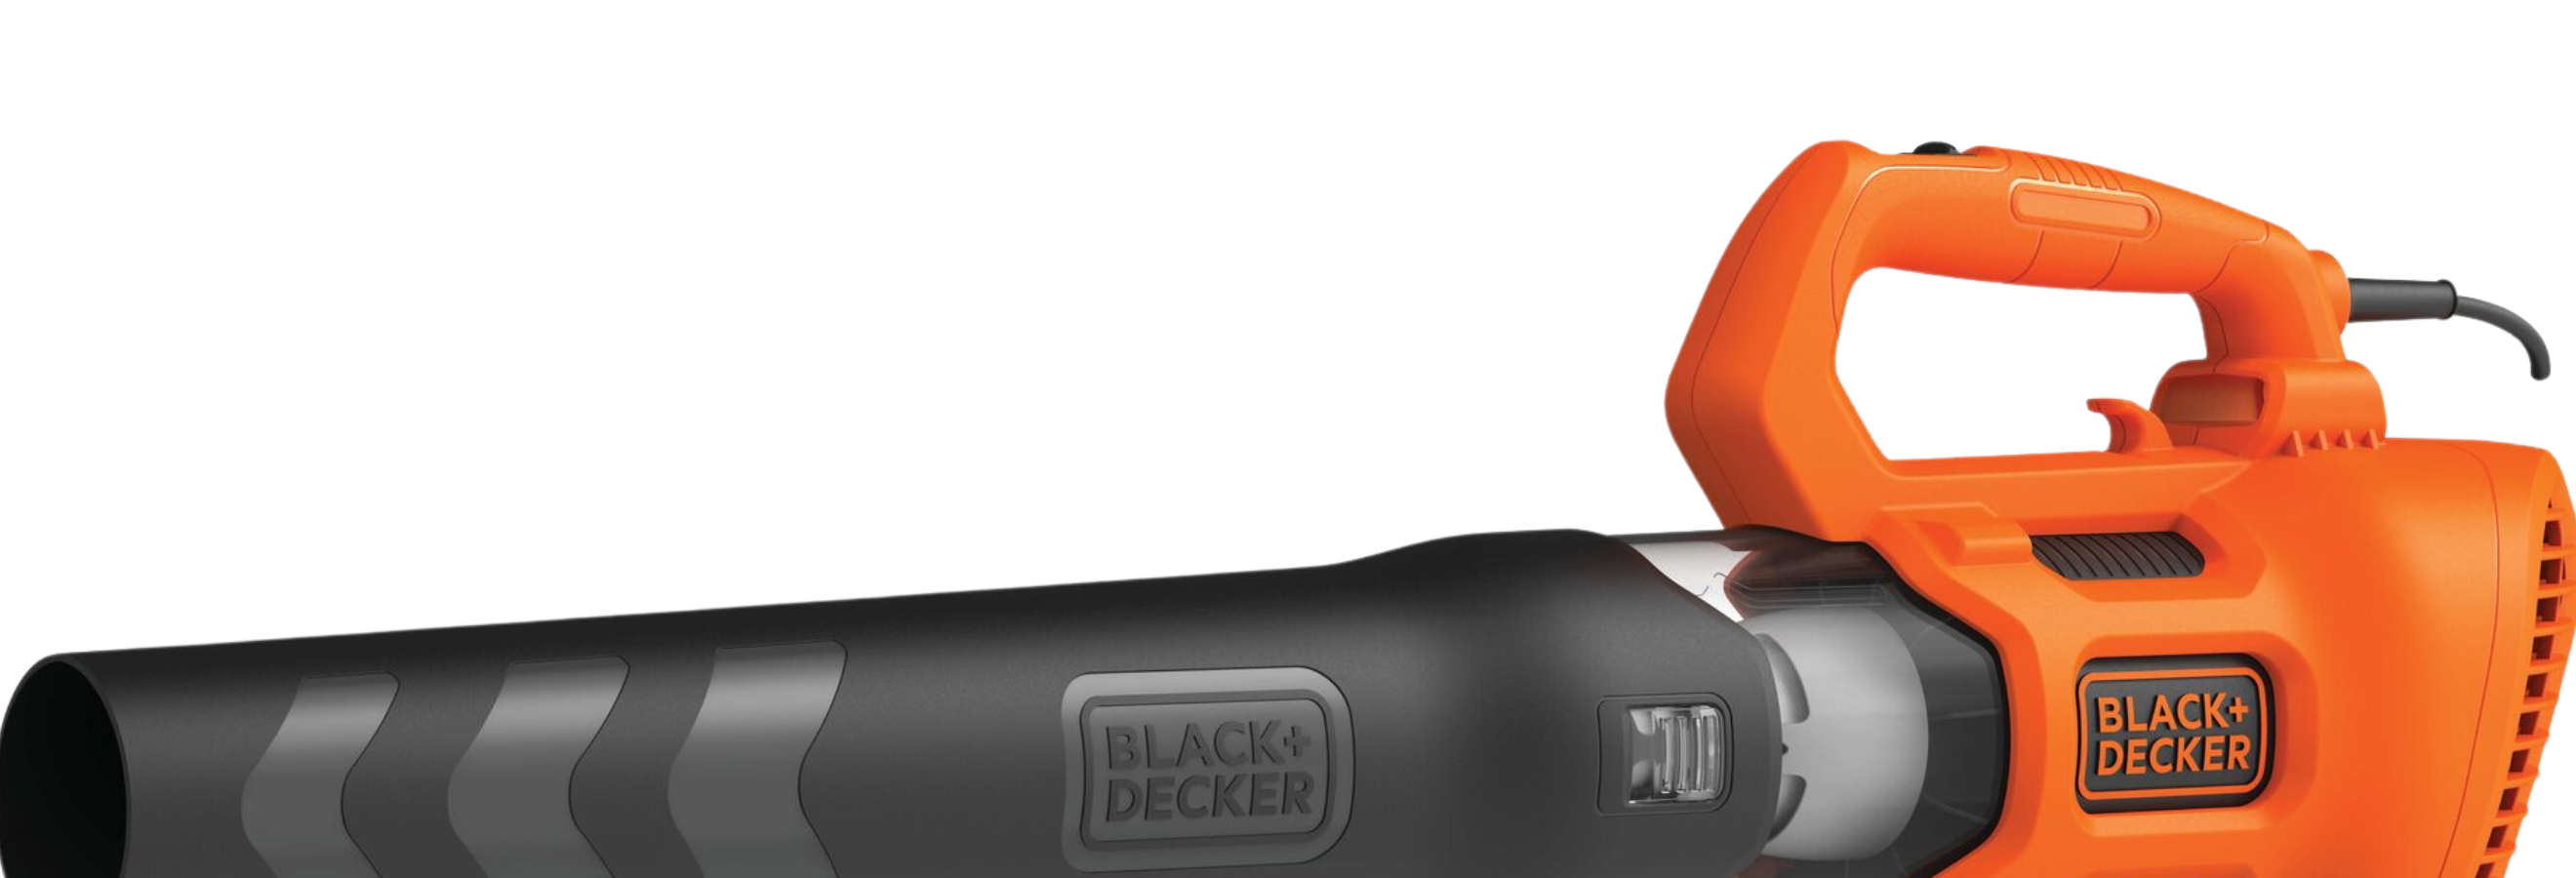 Black & Decker Bebl750 9 Amp Compact Corded Axial Leaf Blower : Target